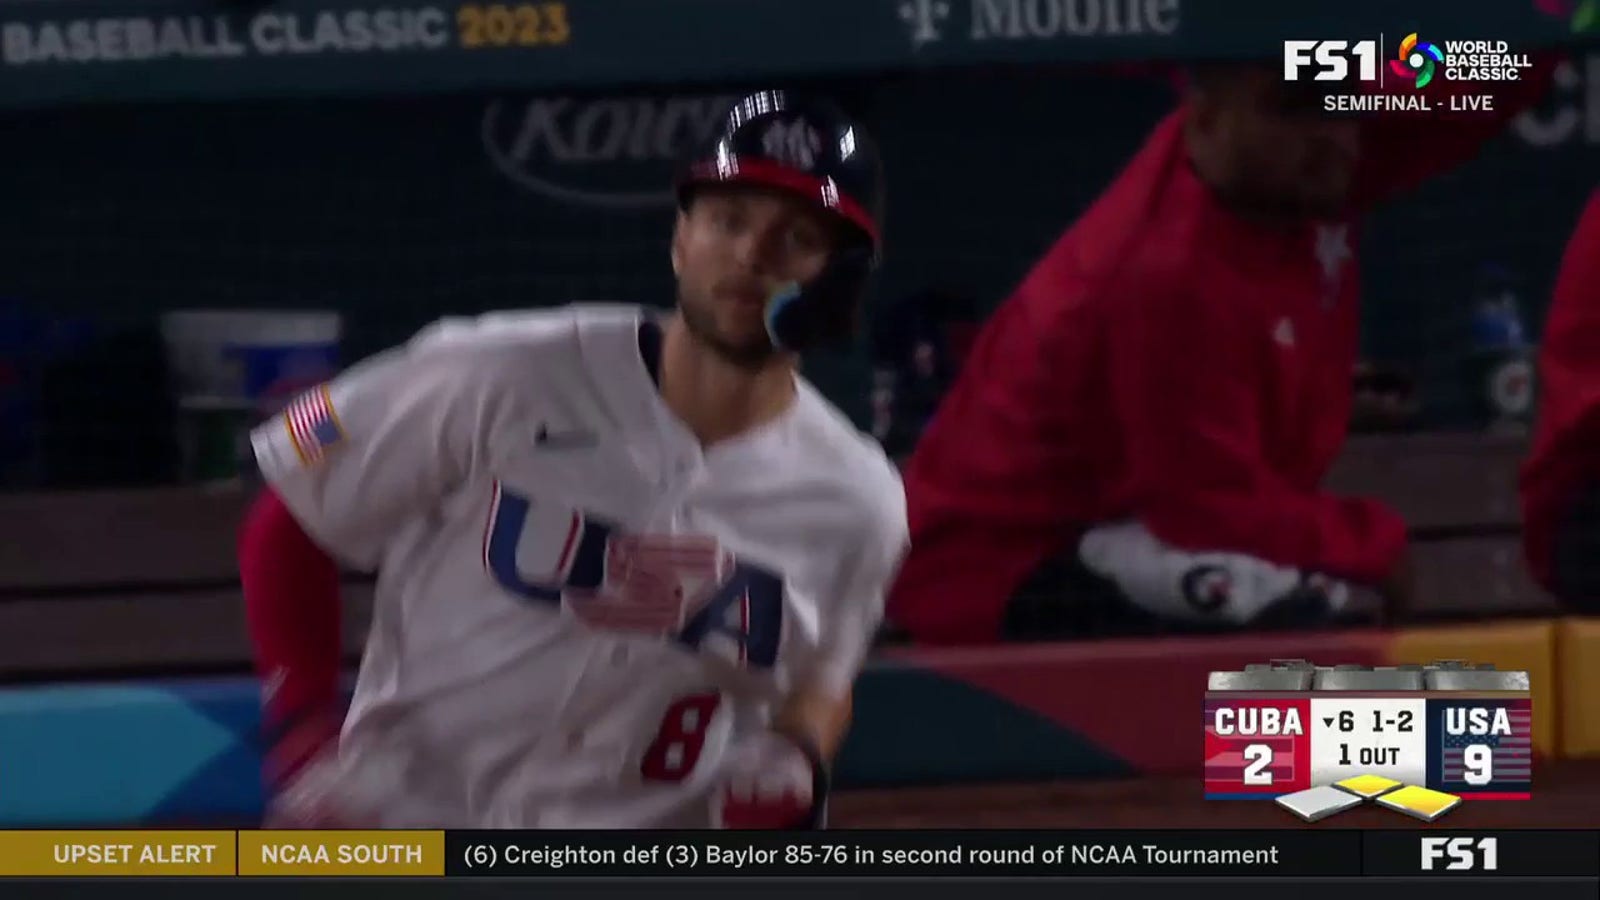 Trea Turner crushes a three-run home run vs. Cuba, his second of the night